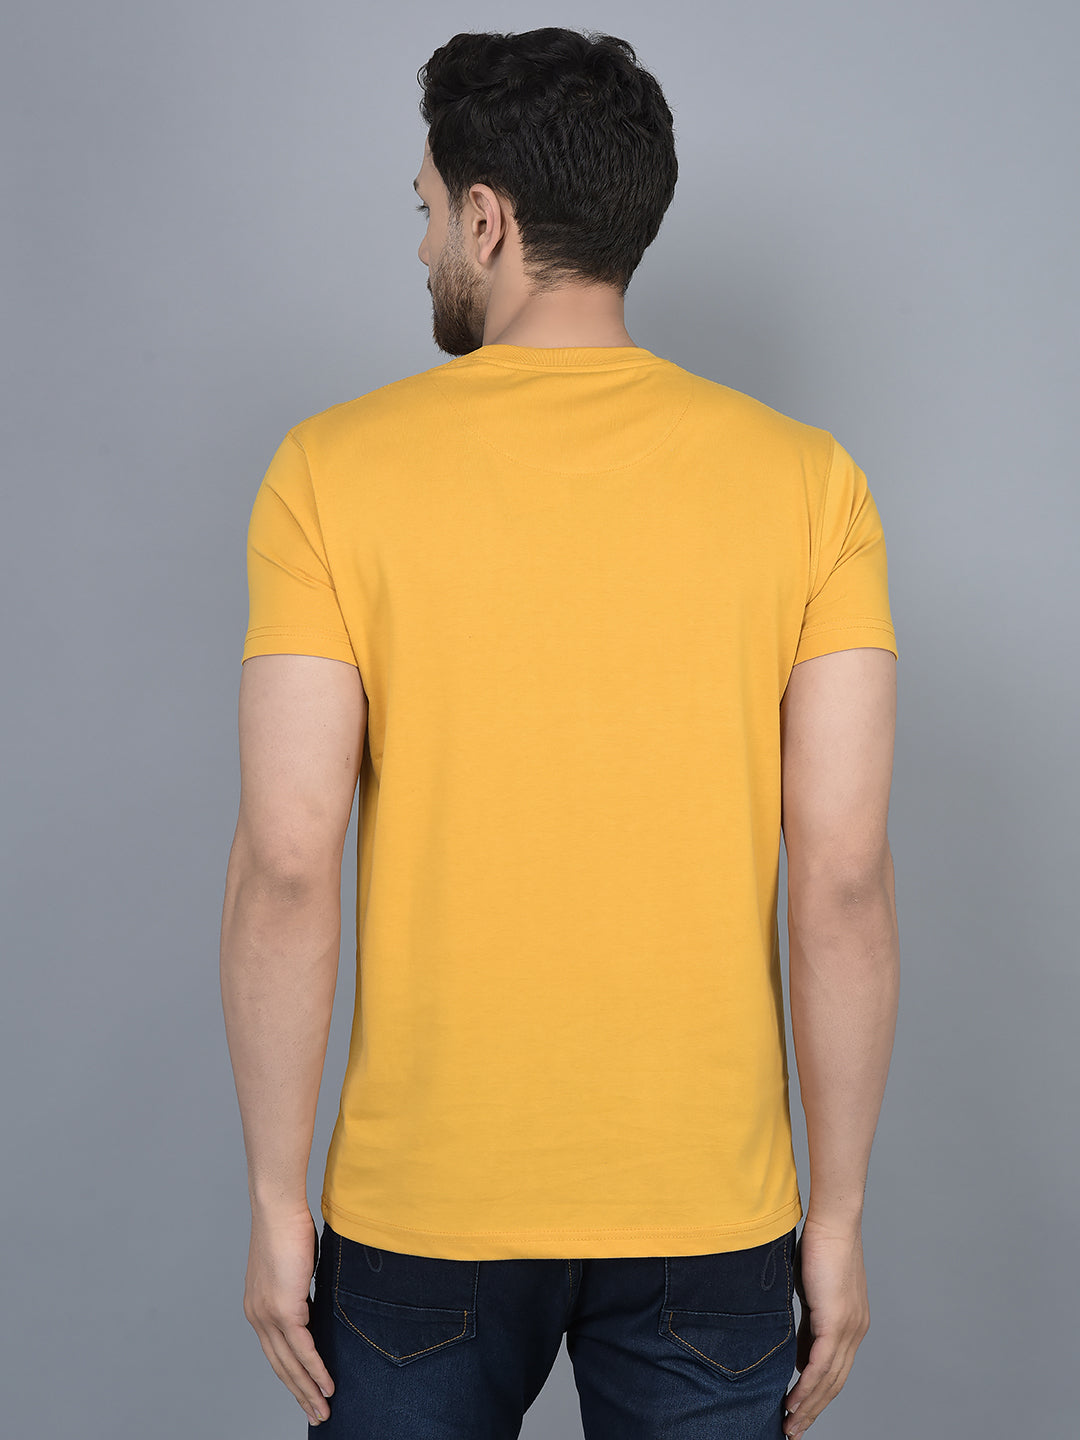 Cobb Mustard Printed Round Neck T-Shirt